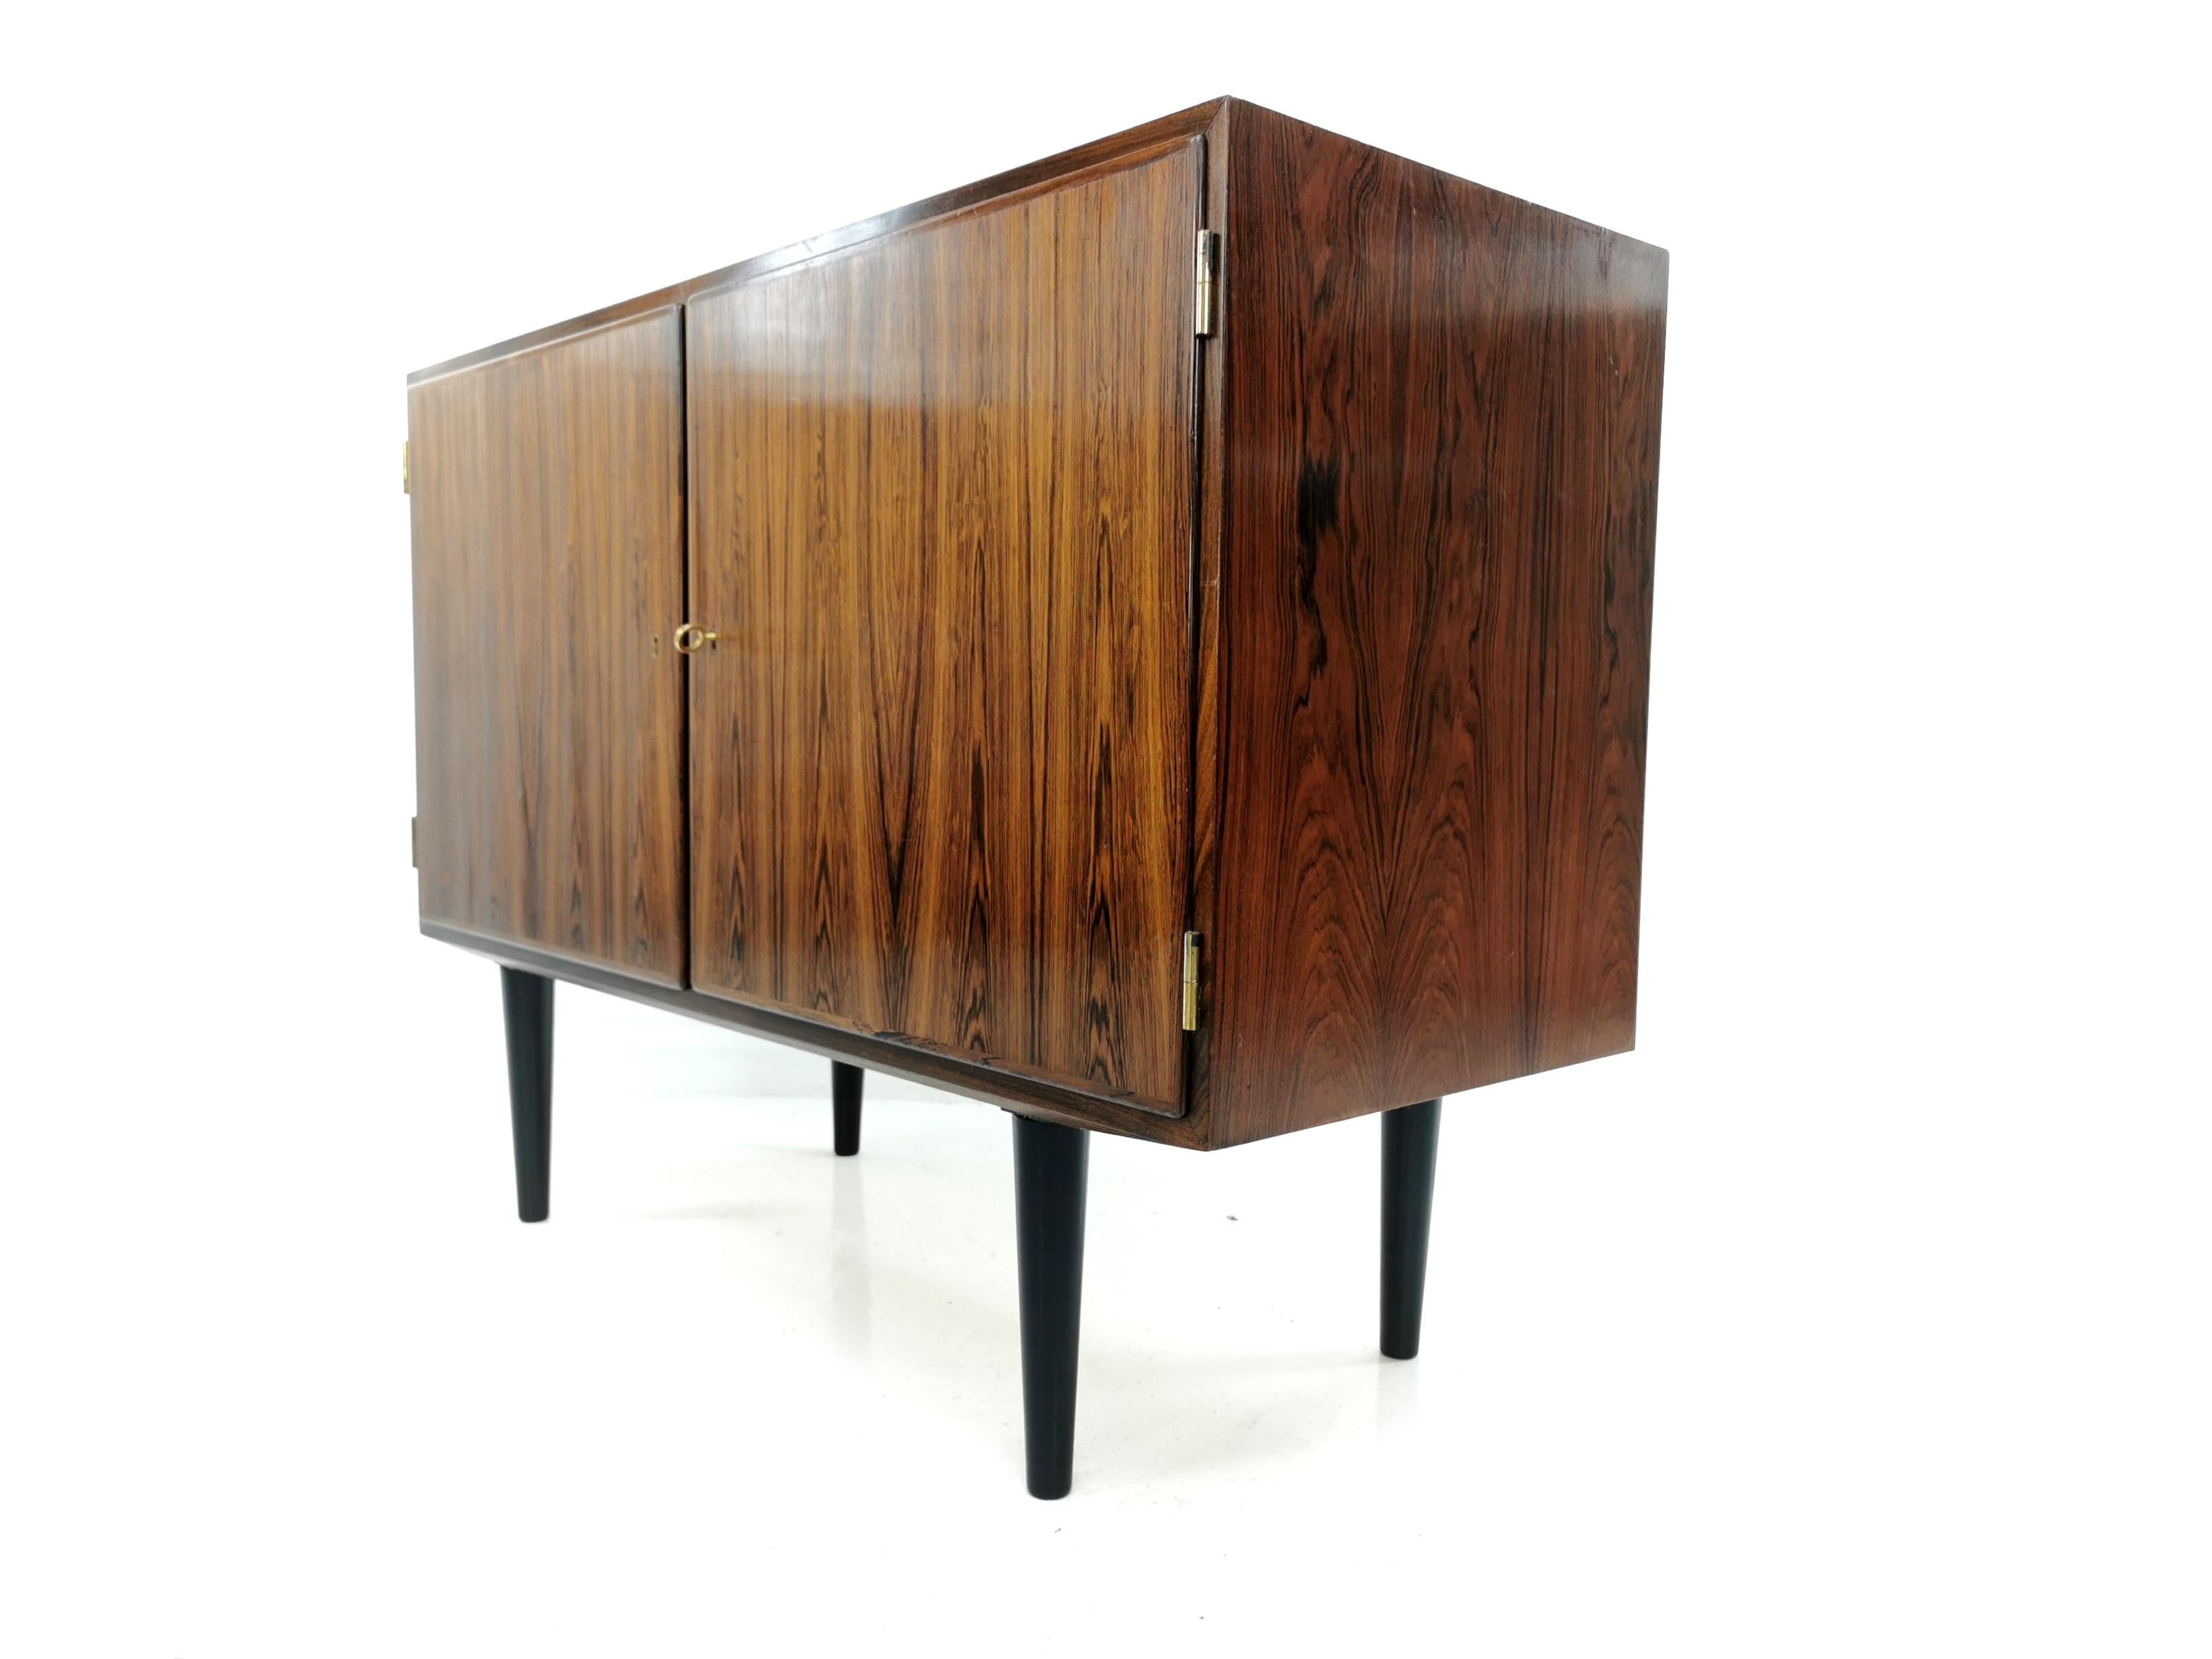 Danish Hundevad Rosewood Media Unit Sideboard 1970s Midcentury Vintage Cabinet 5